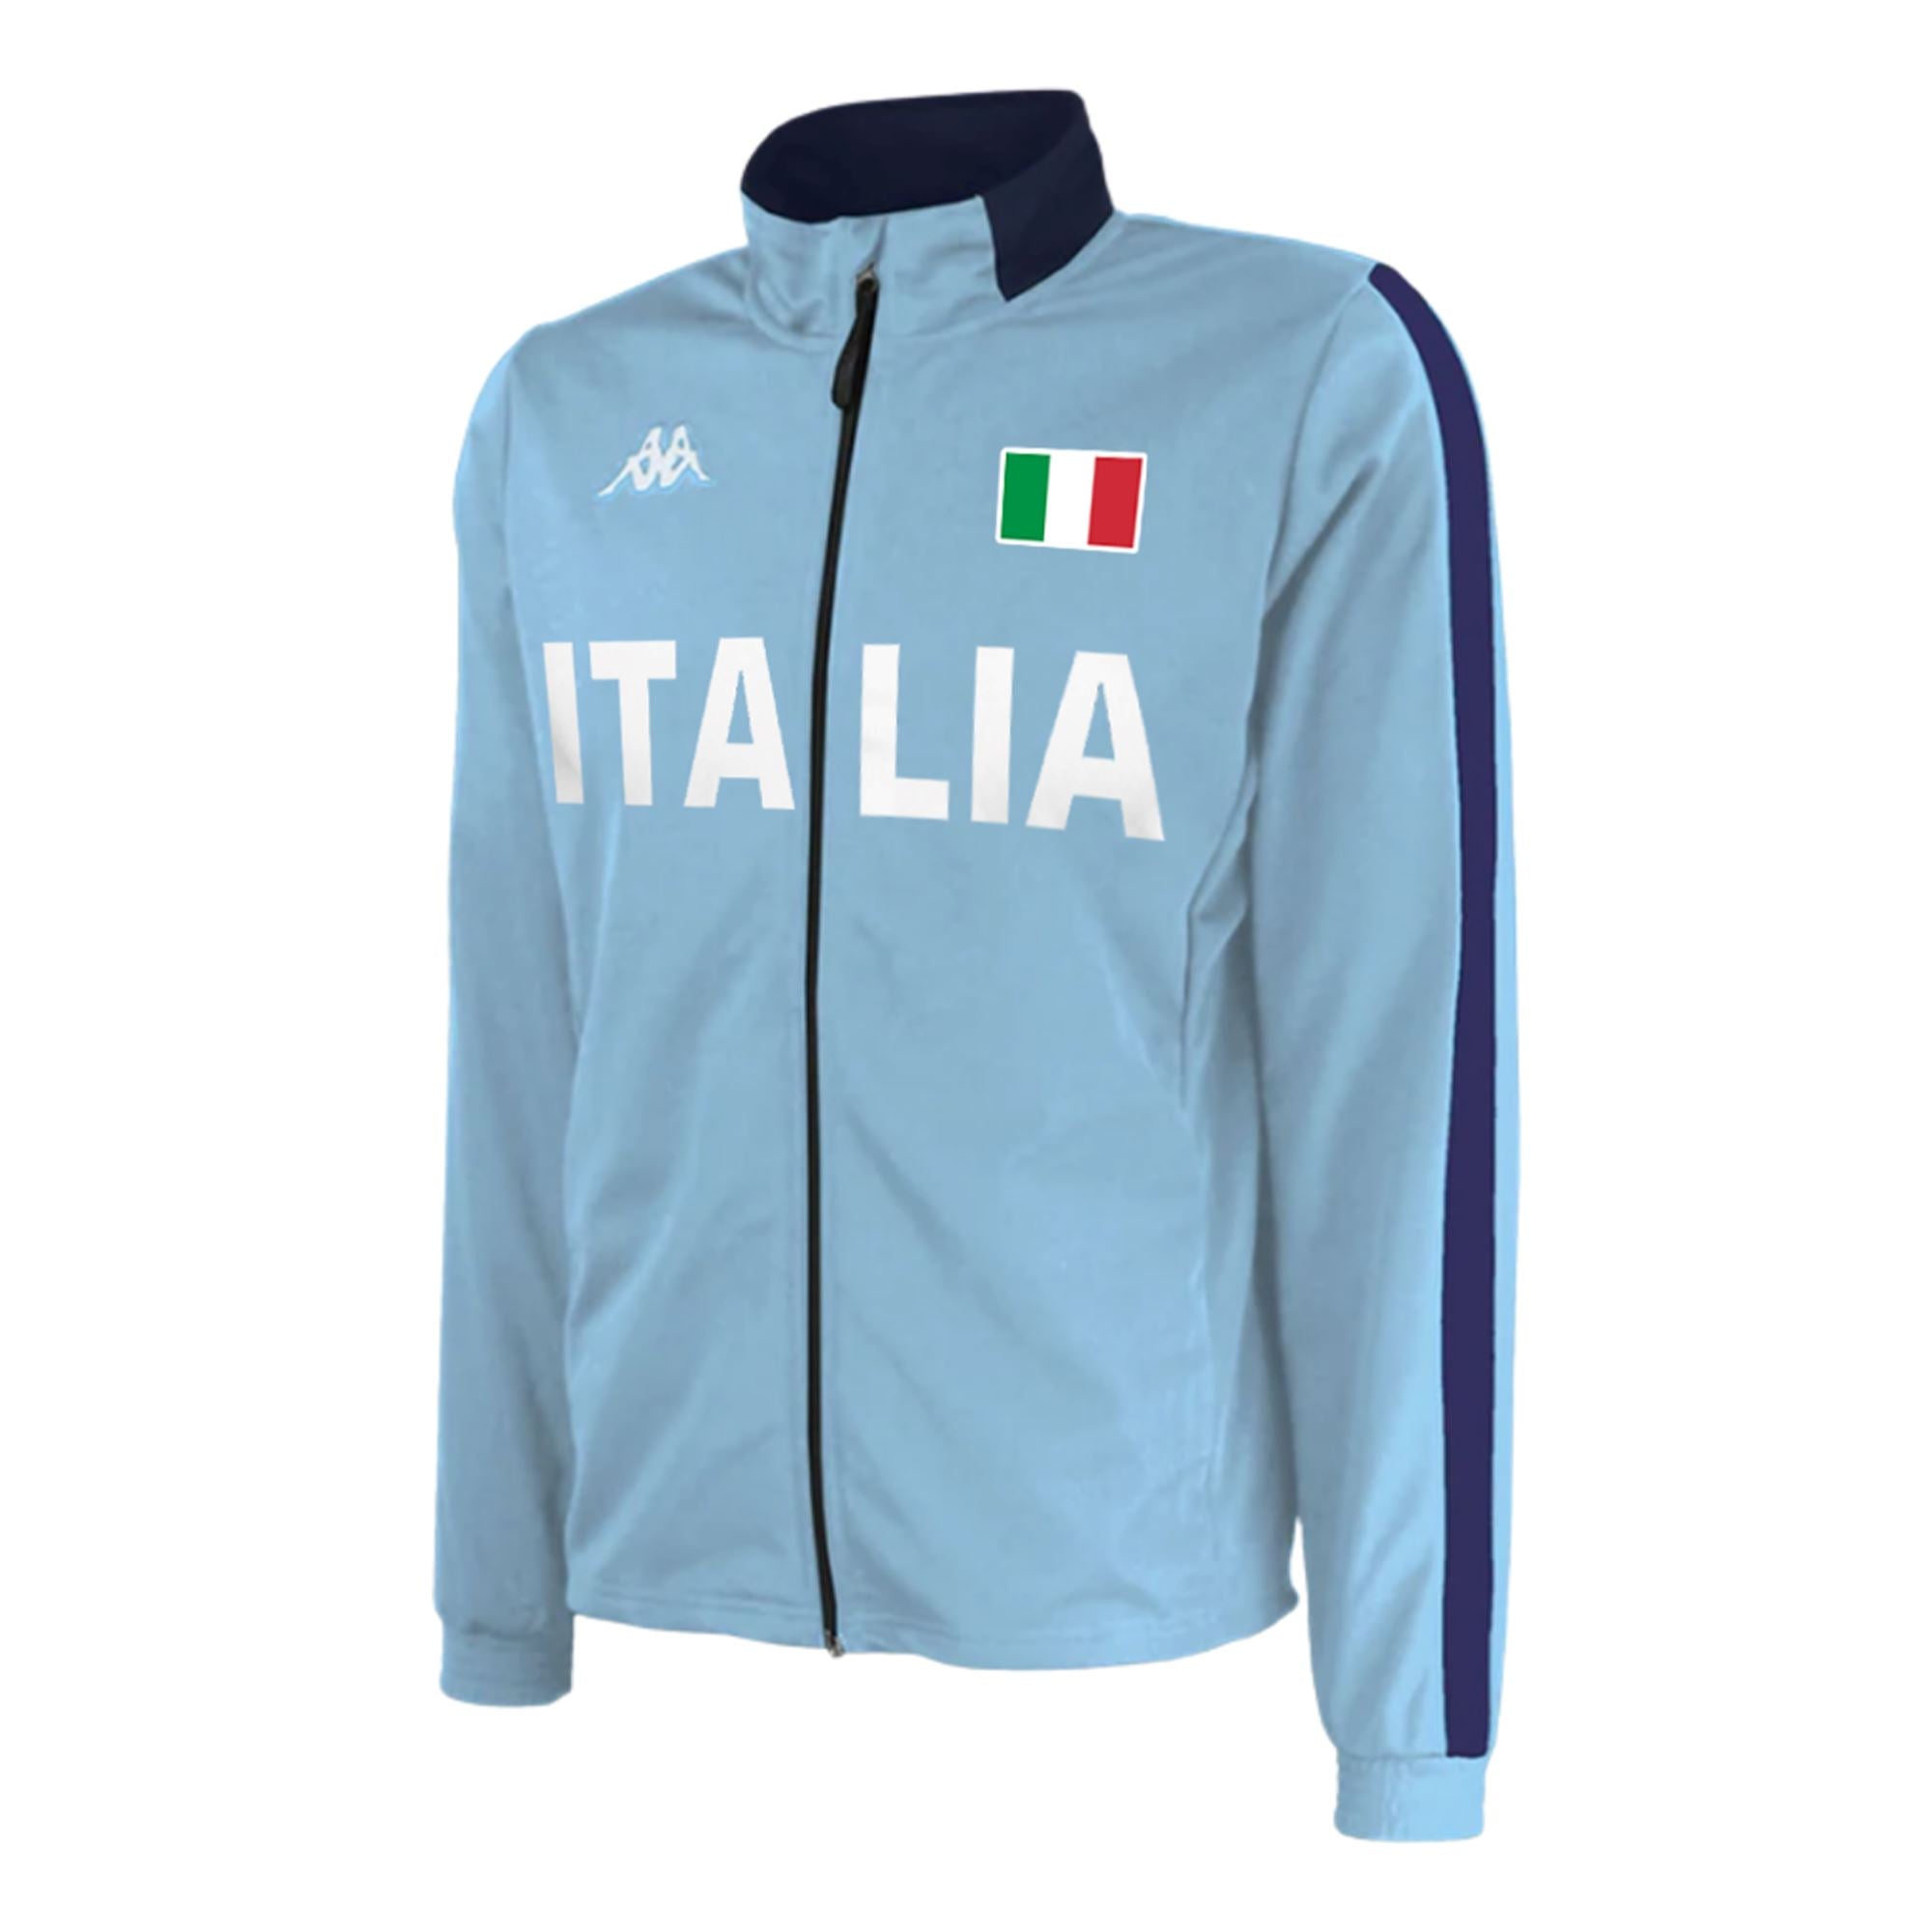 Kappa Sport Italia Salcito Full Zip Jacket - ITASPORT